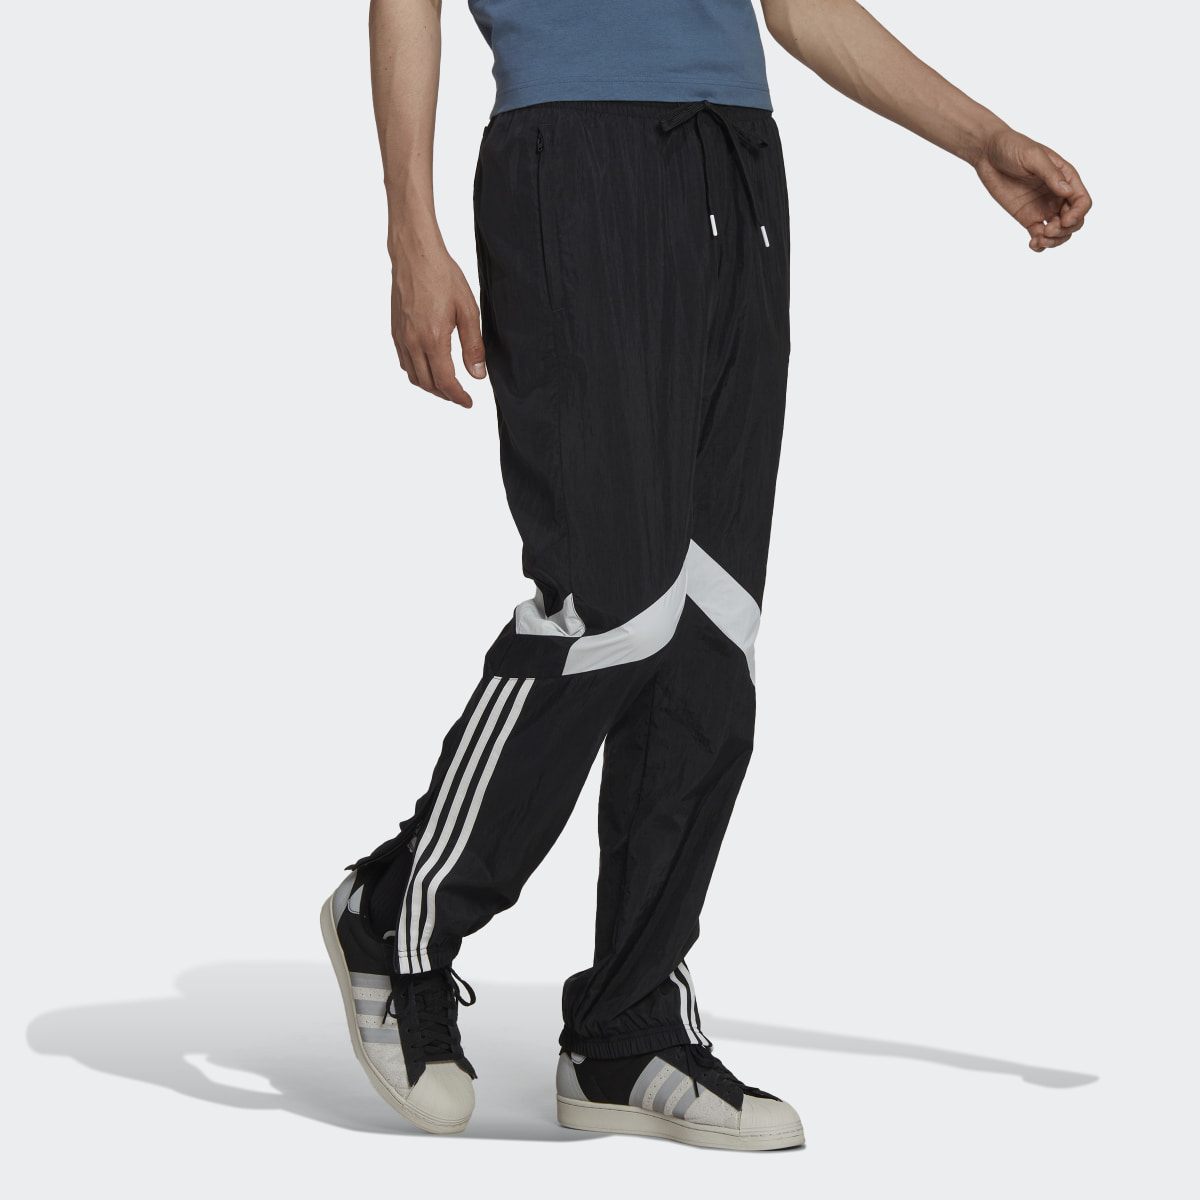 Adidas Rekive Track Pants. 4